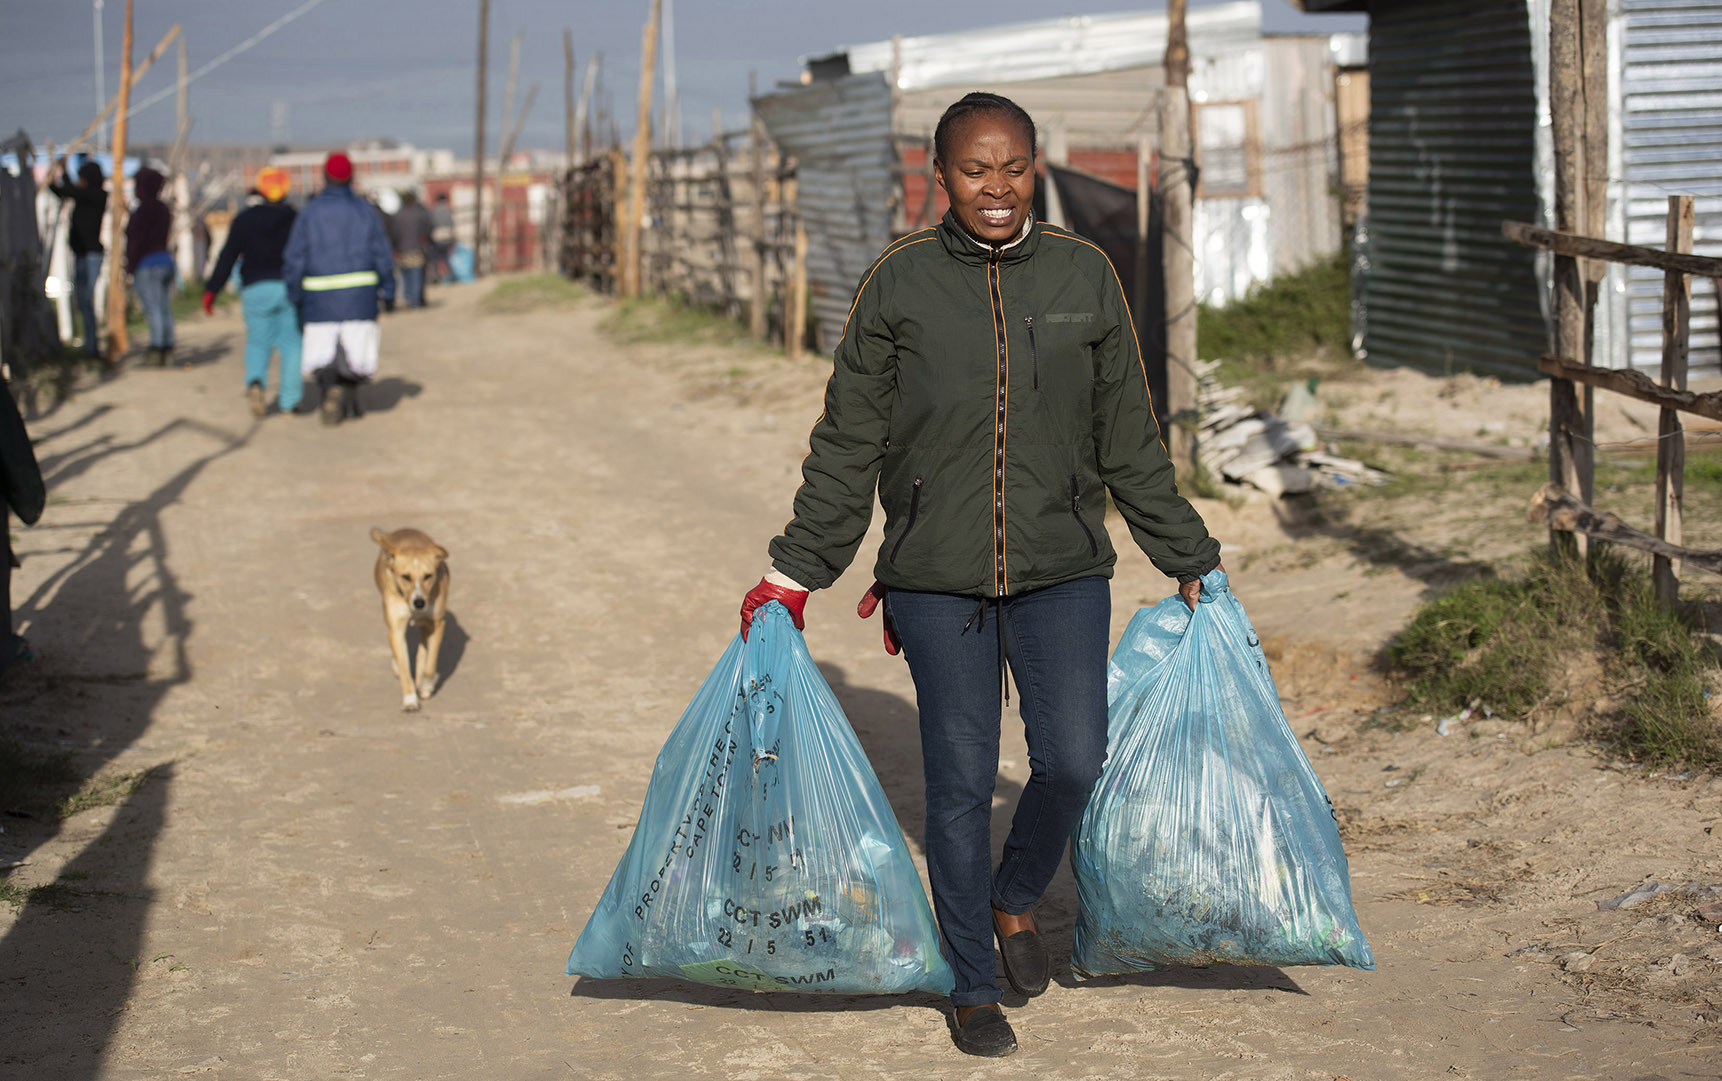 Volunteer Nomathama Sauls carrying bags of litter